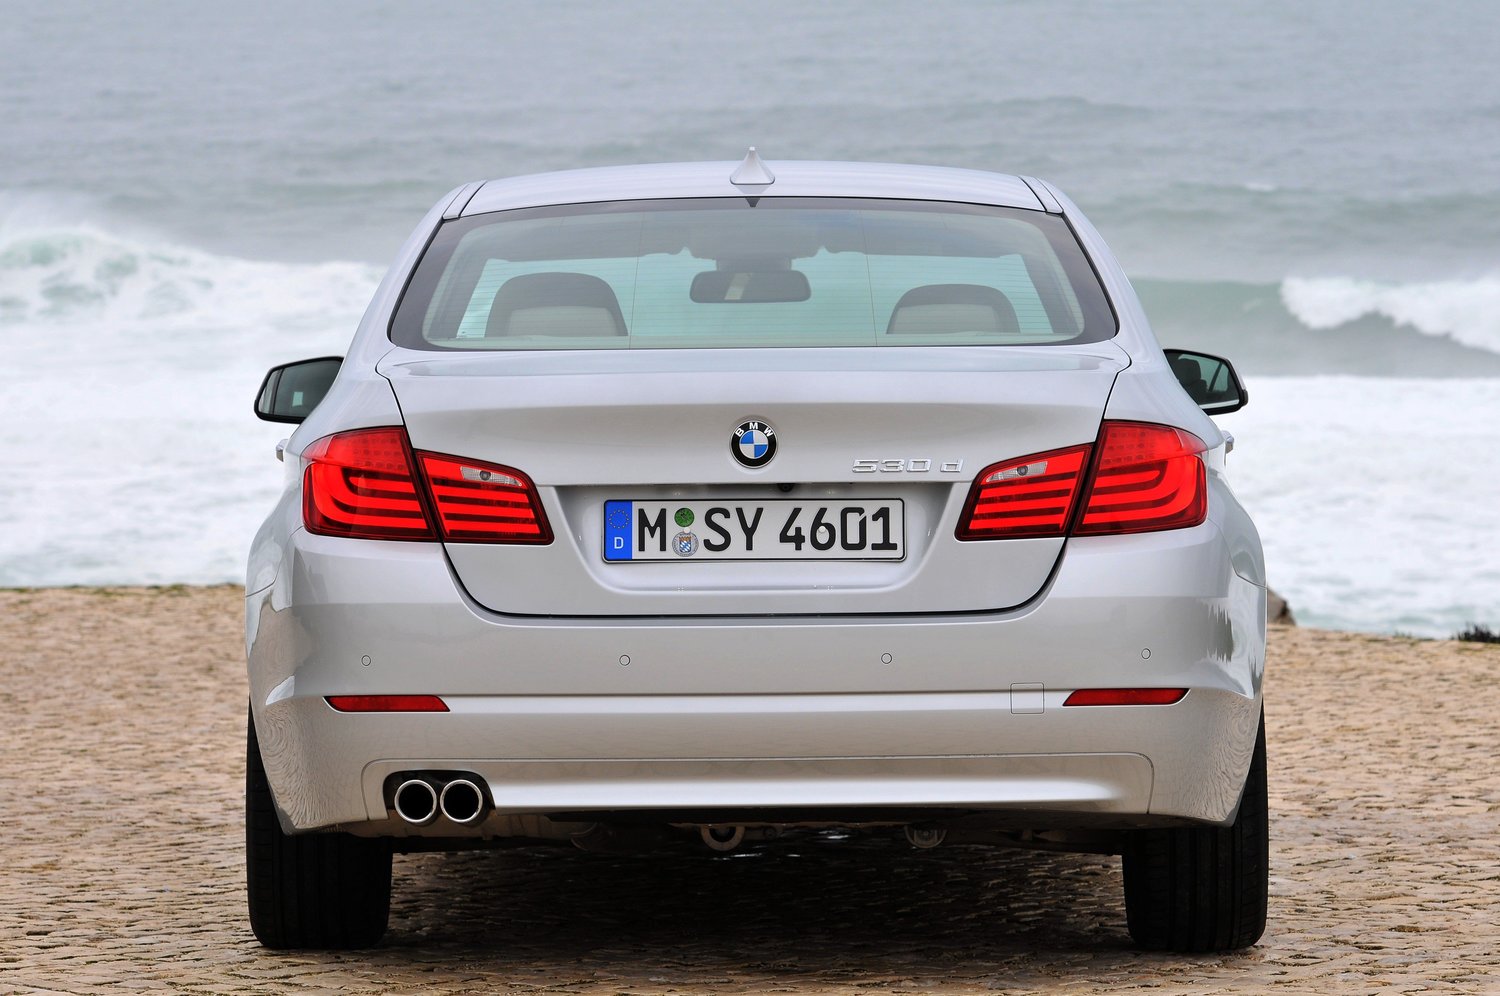 седан BMW 5er 2010 - 2013г выпуска модификация 2.5 AT (204 л.с.)